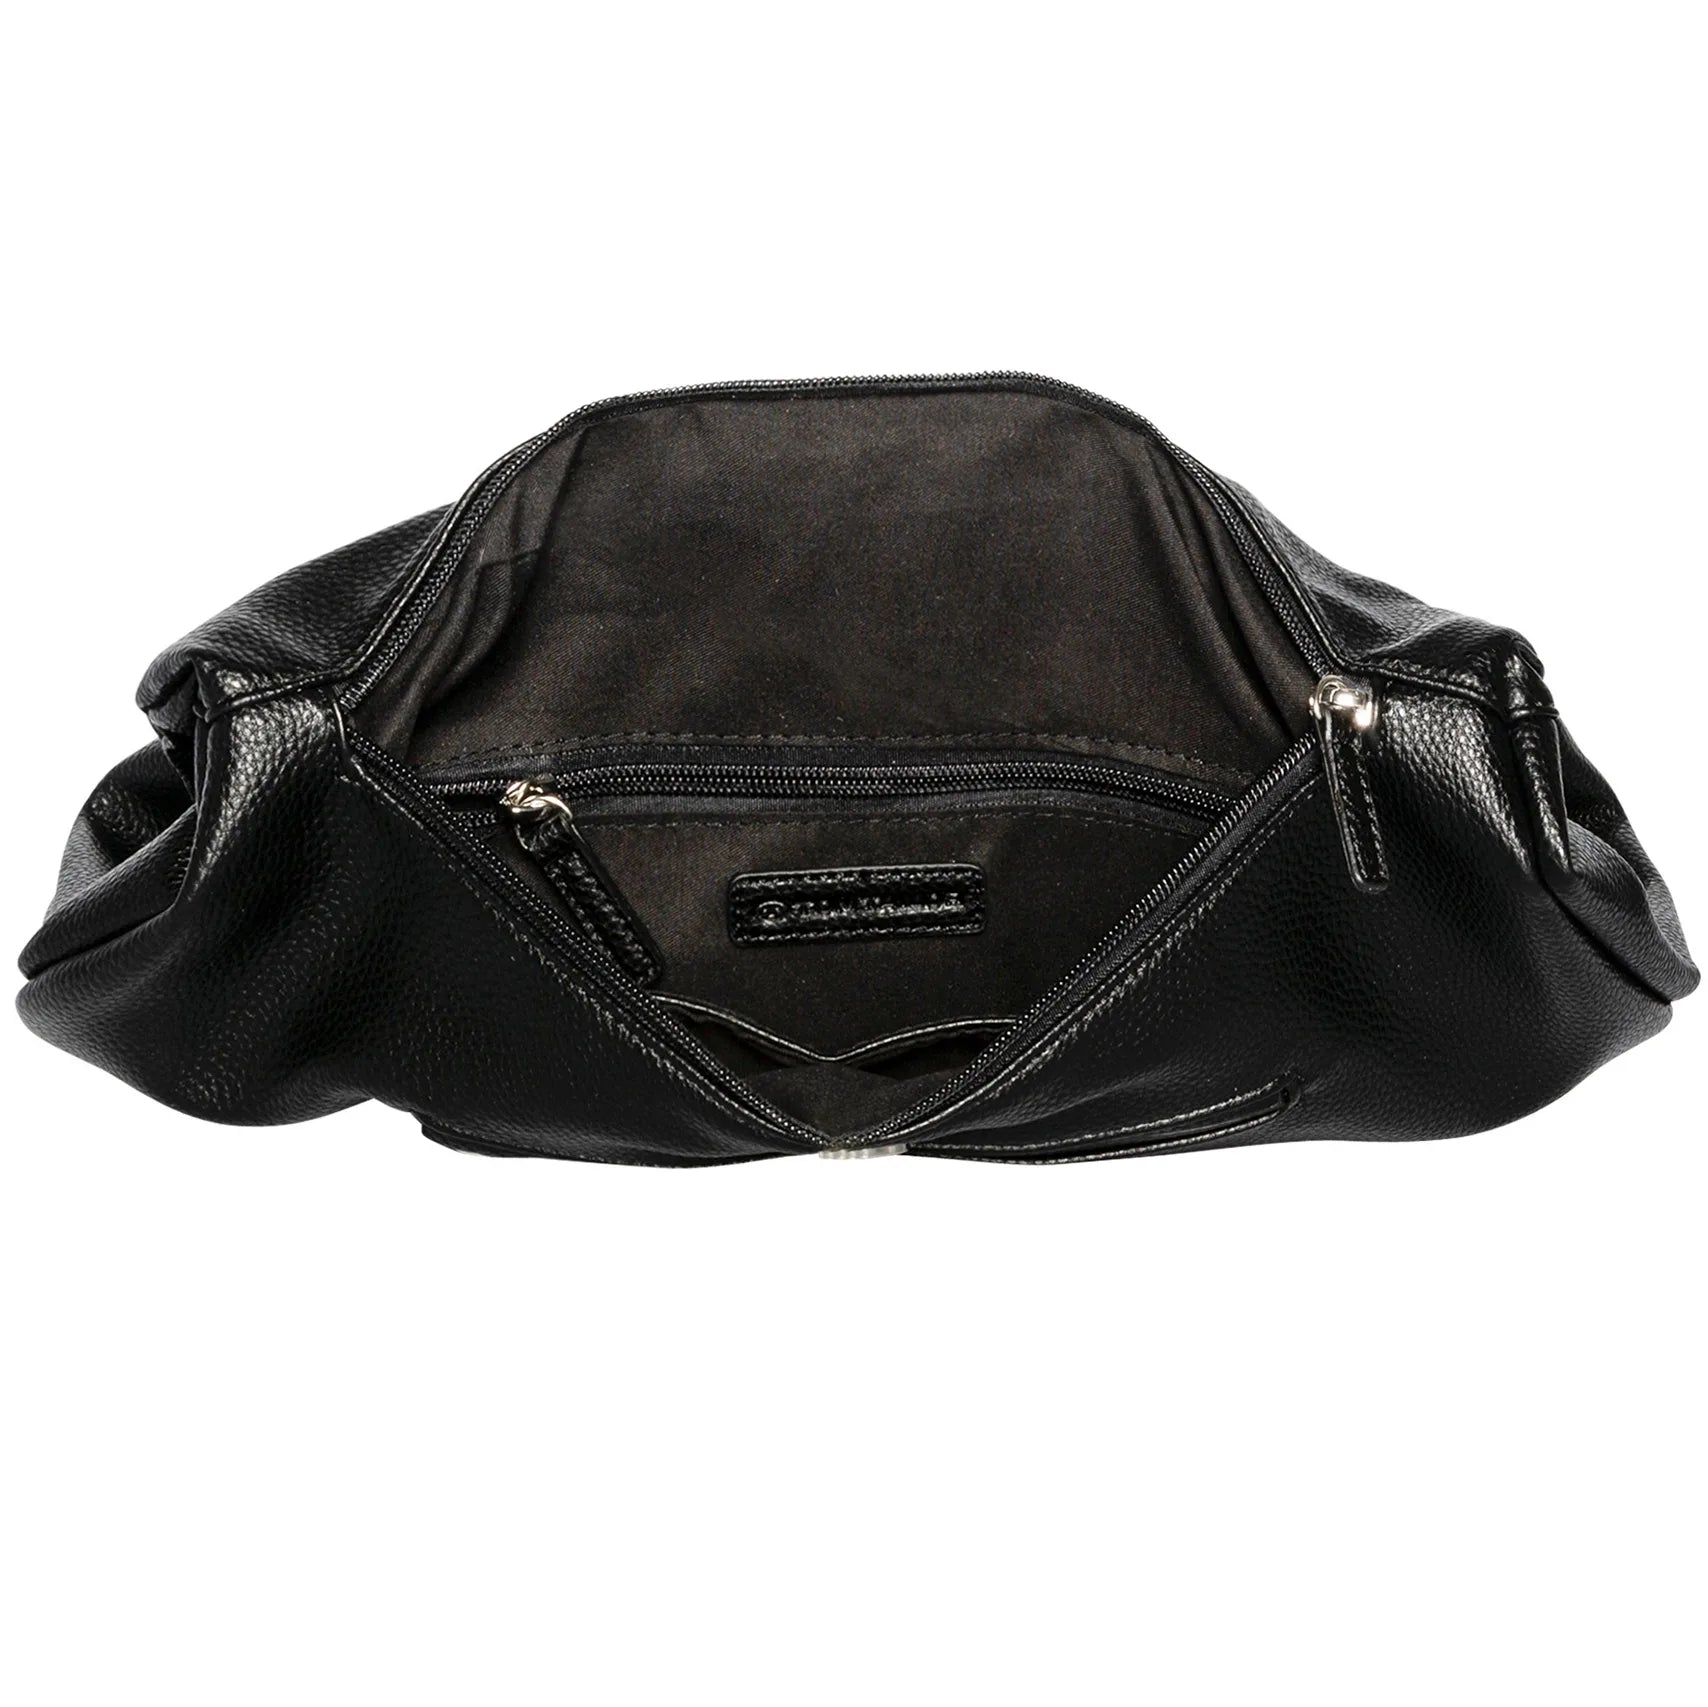 Tom Tailor Bags Tinna Backpack 33 cm - black